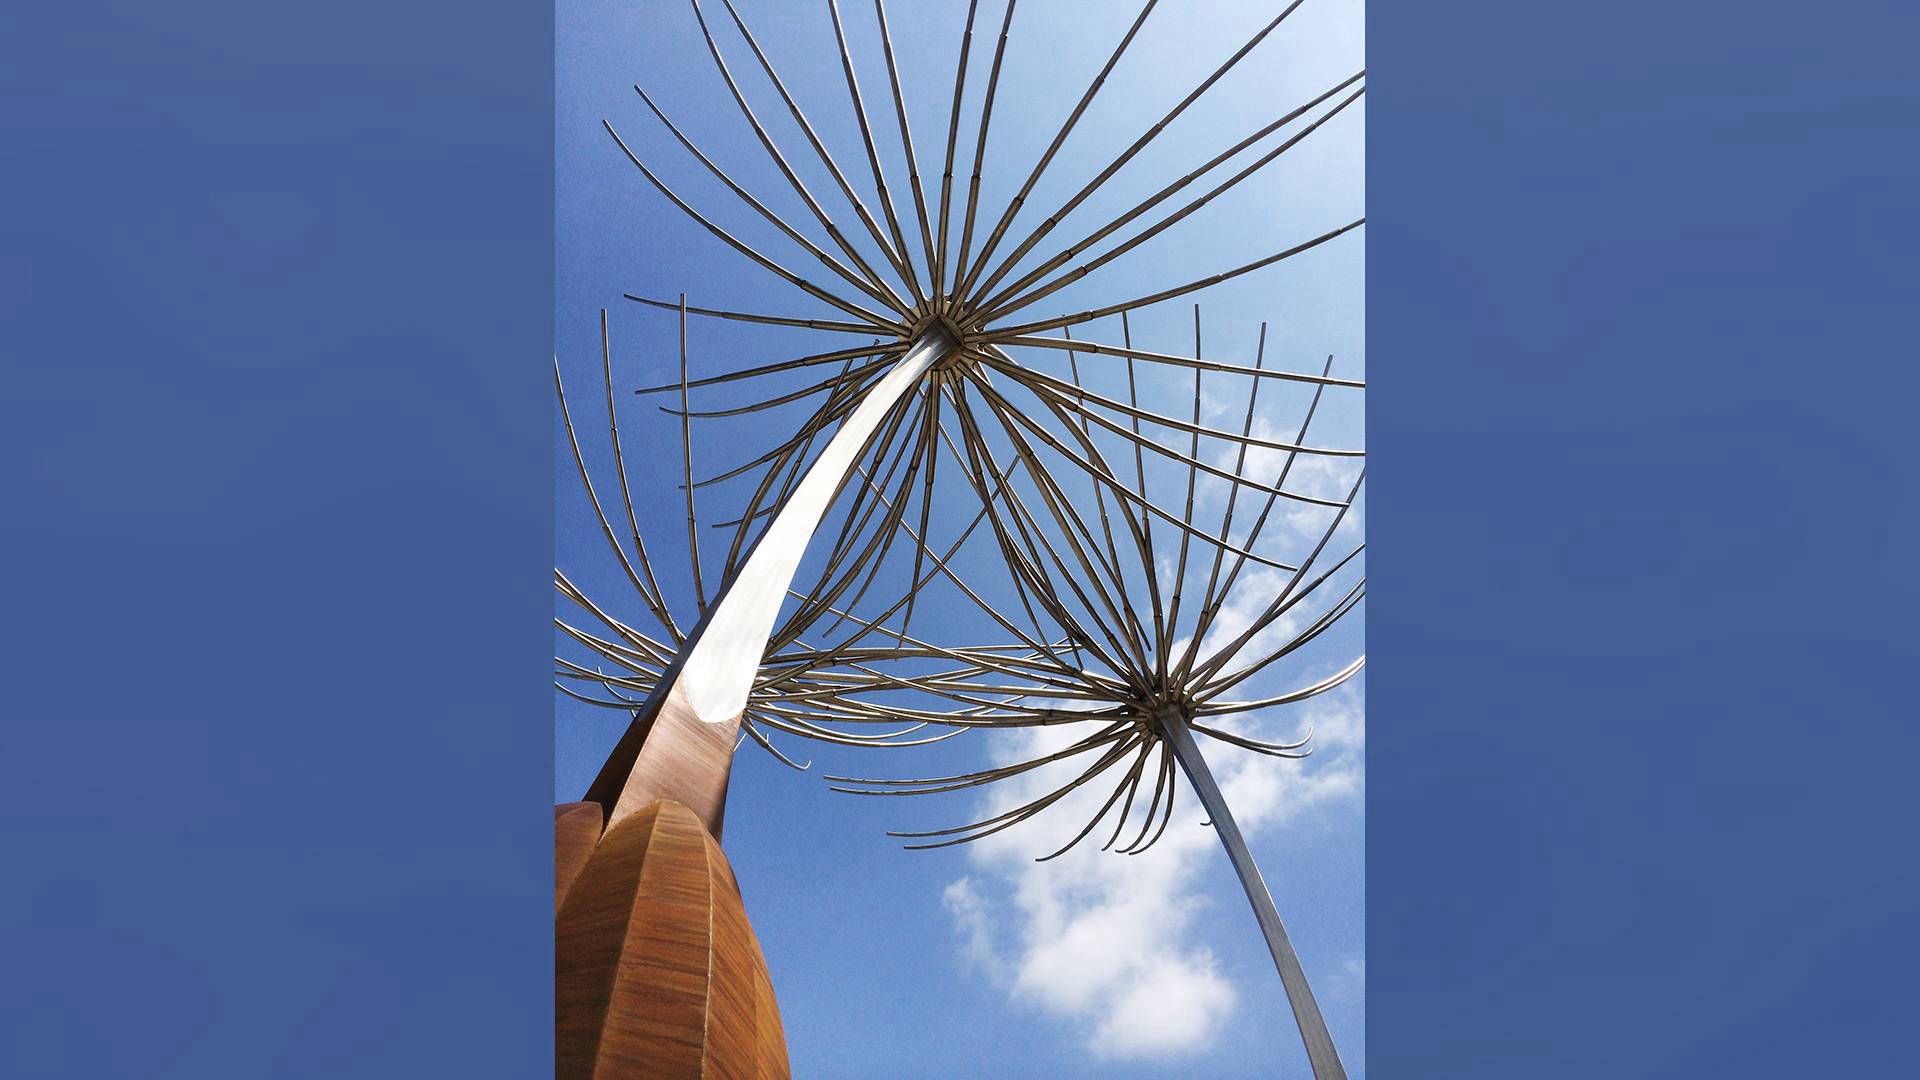 Wish - corten stainless steel public art dandelion sculpture by Heath Satow Los Angeles CA